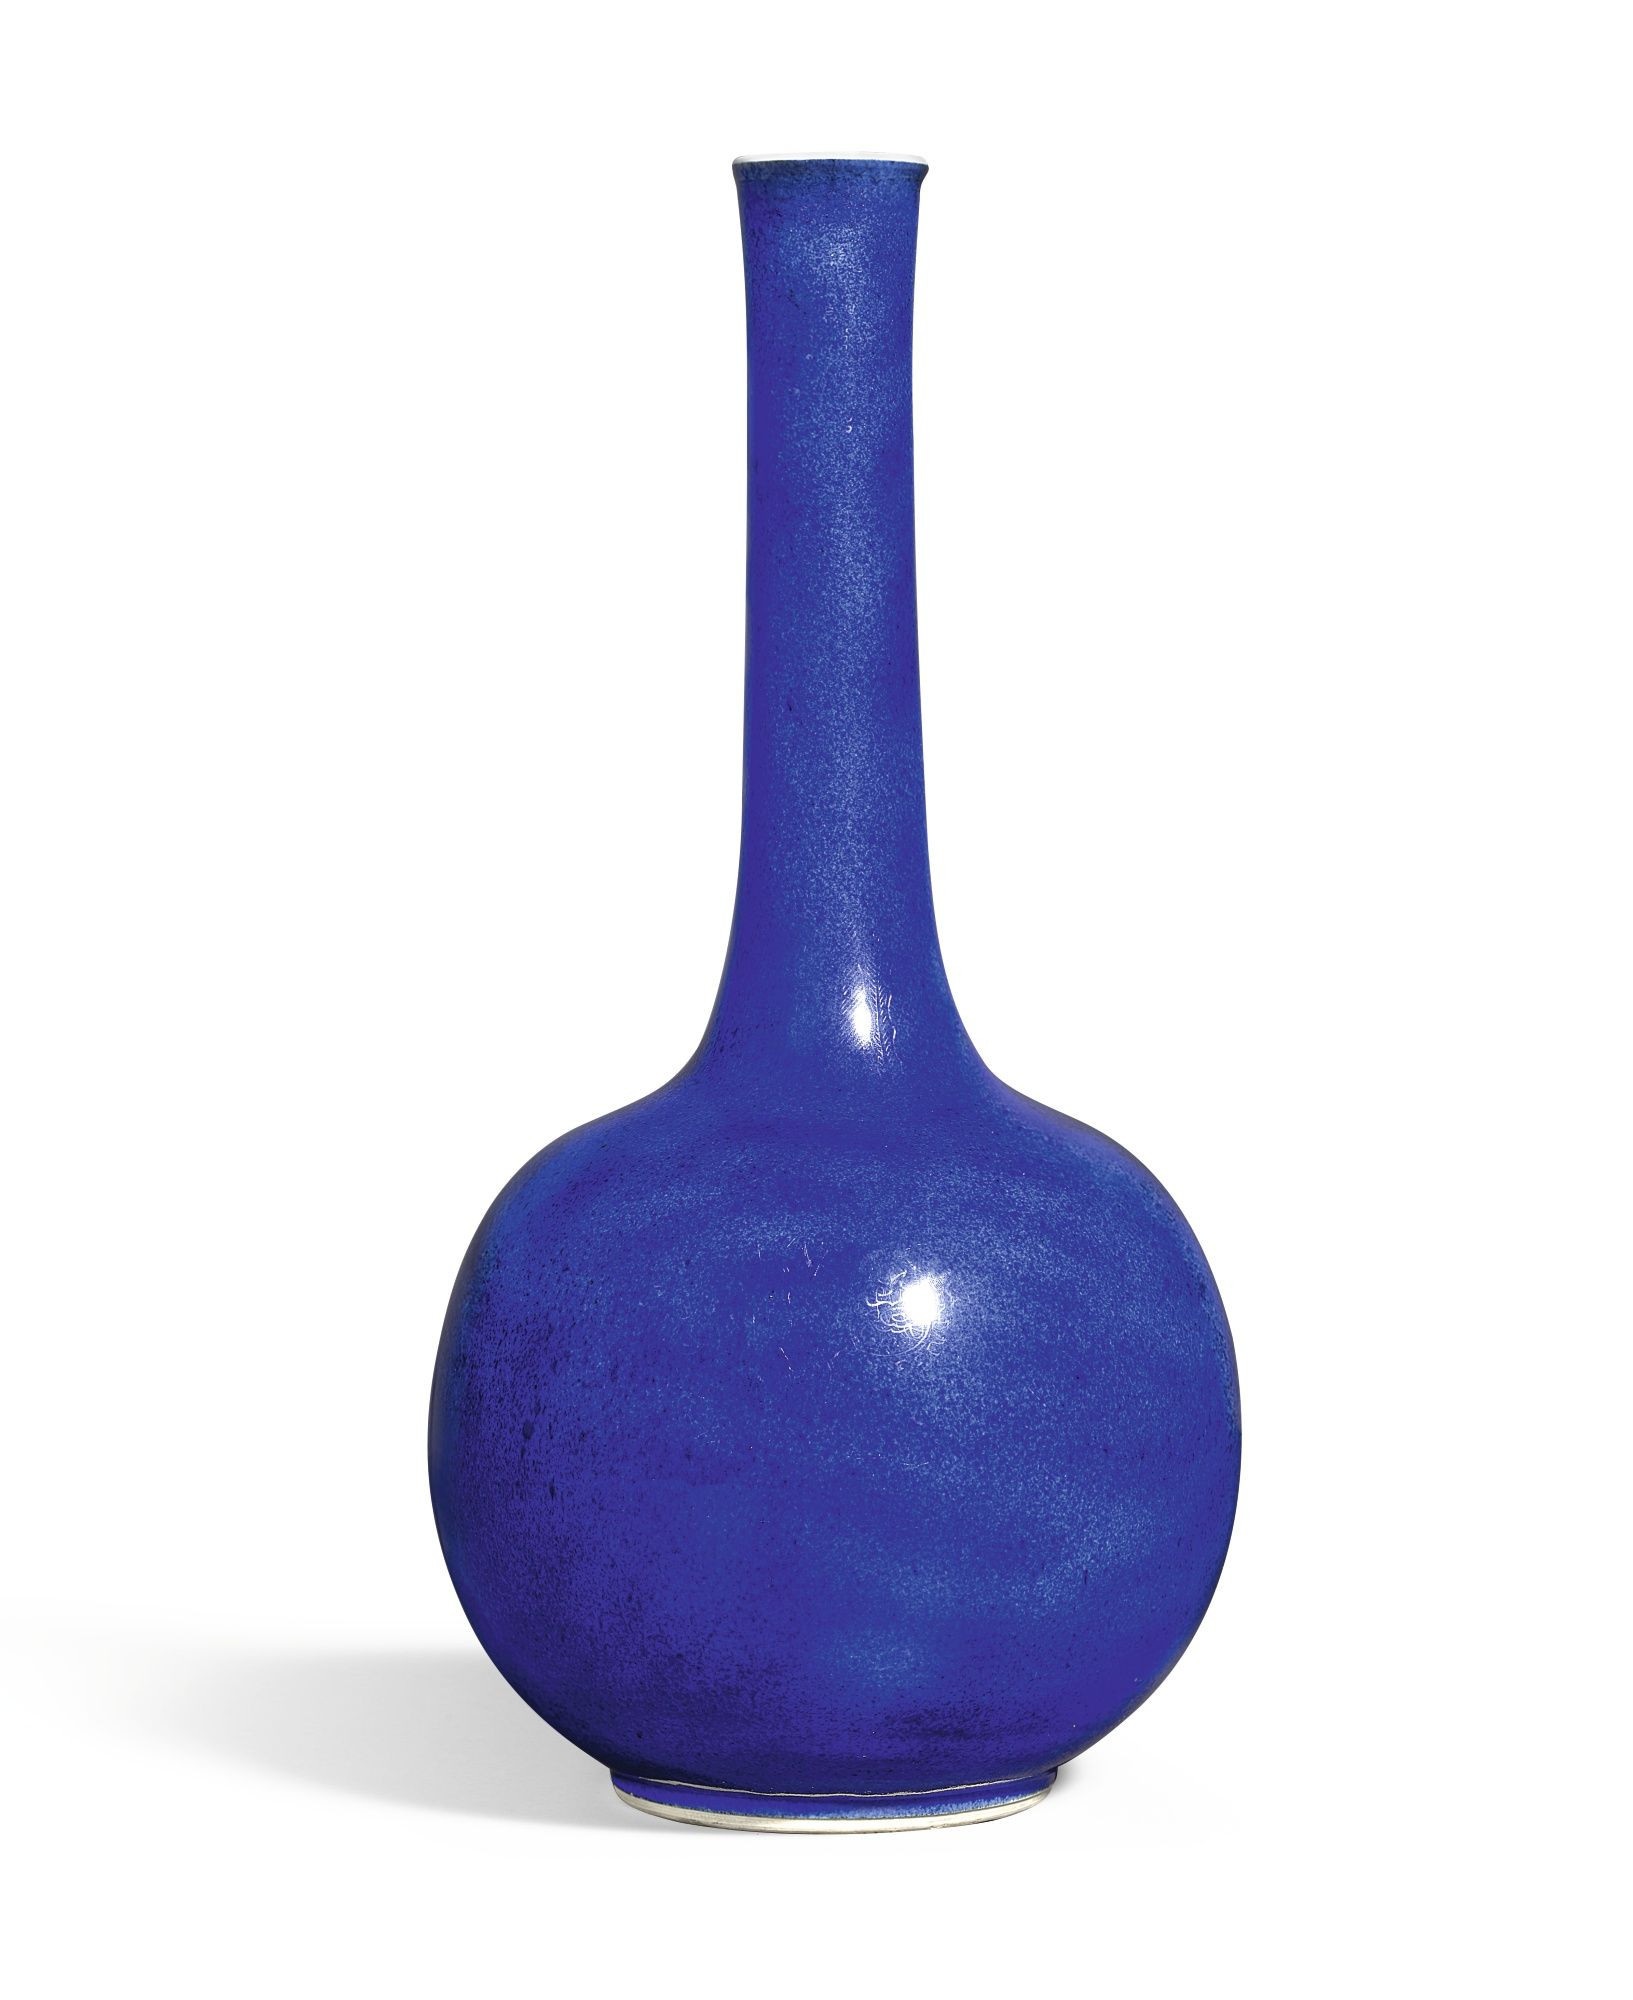 purple ceramic vase of a powder blue glazed bottle vase qing dynasty kangxi period throughout a powder blue glazed bottle vase qing dynasty kangxi period 1662 1722